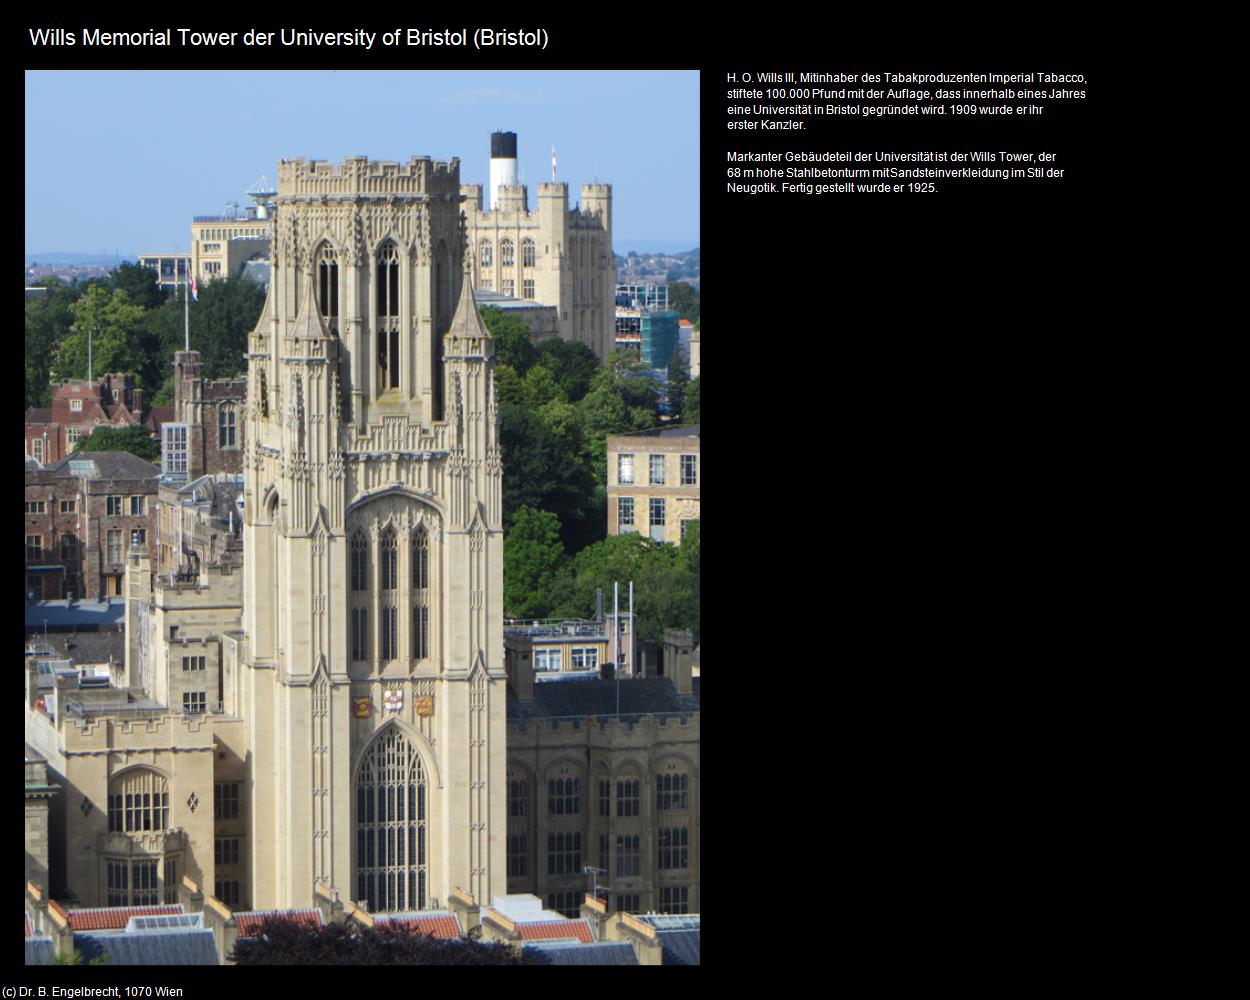 Wills Memorial Tower der University of Bristol (Bristol, England) in Kulturatlas-ENGLAND und WALES